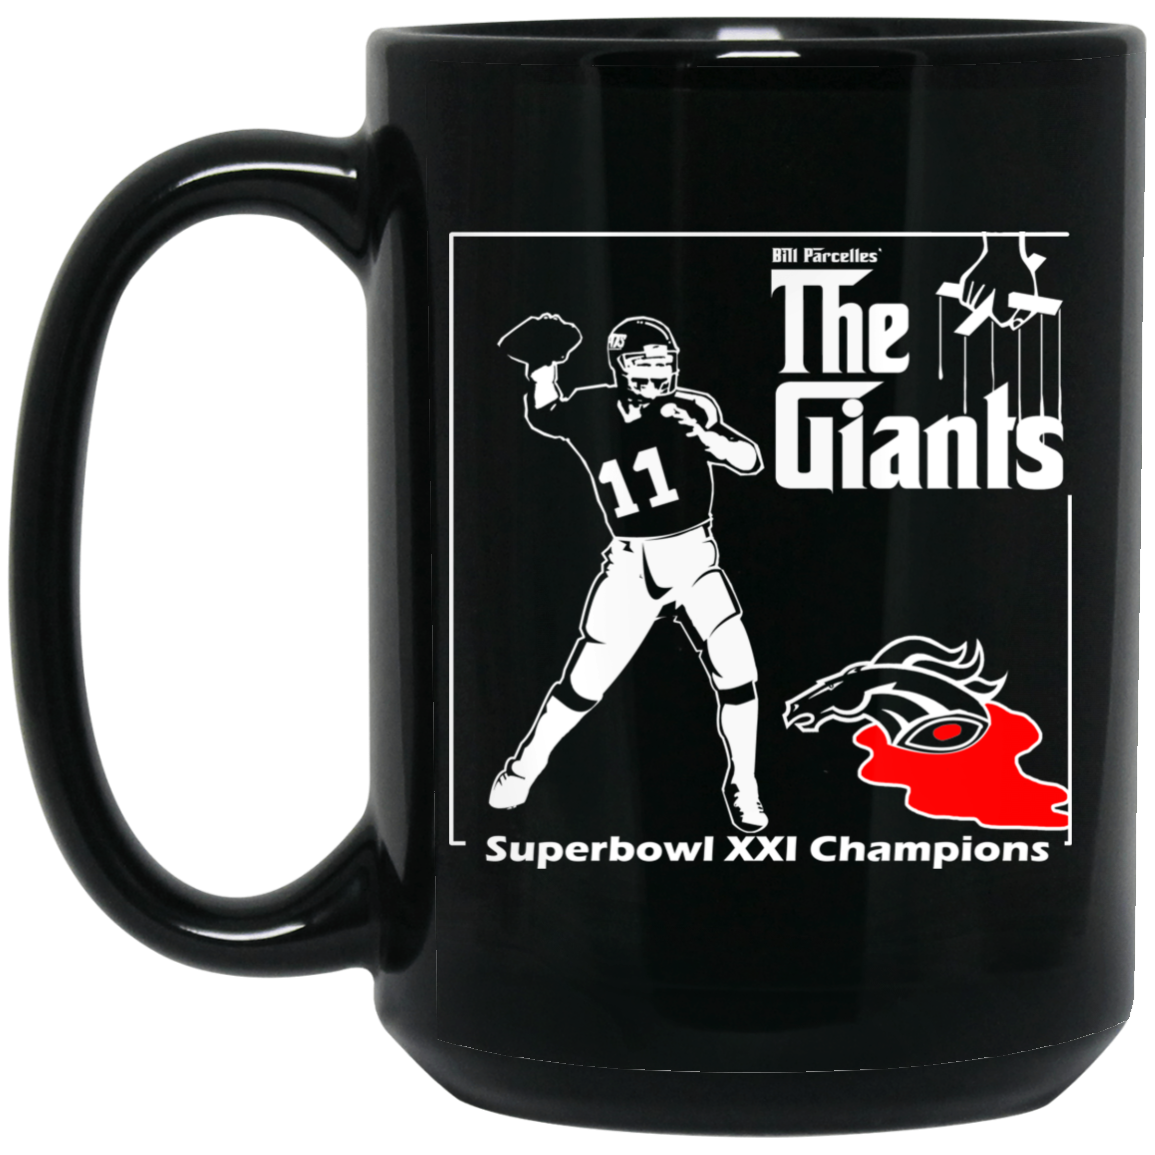 ArtichokeUSA Custom Design. Godfather Simms. NY Giants Superbowl XXI Champions. Fan Art. 15 oz. Black Mug